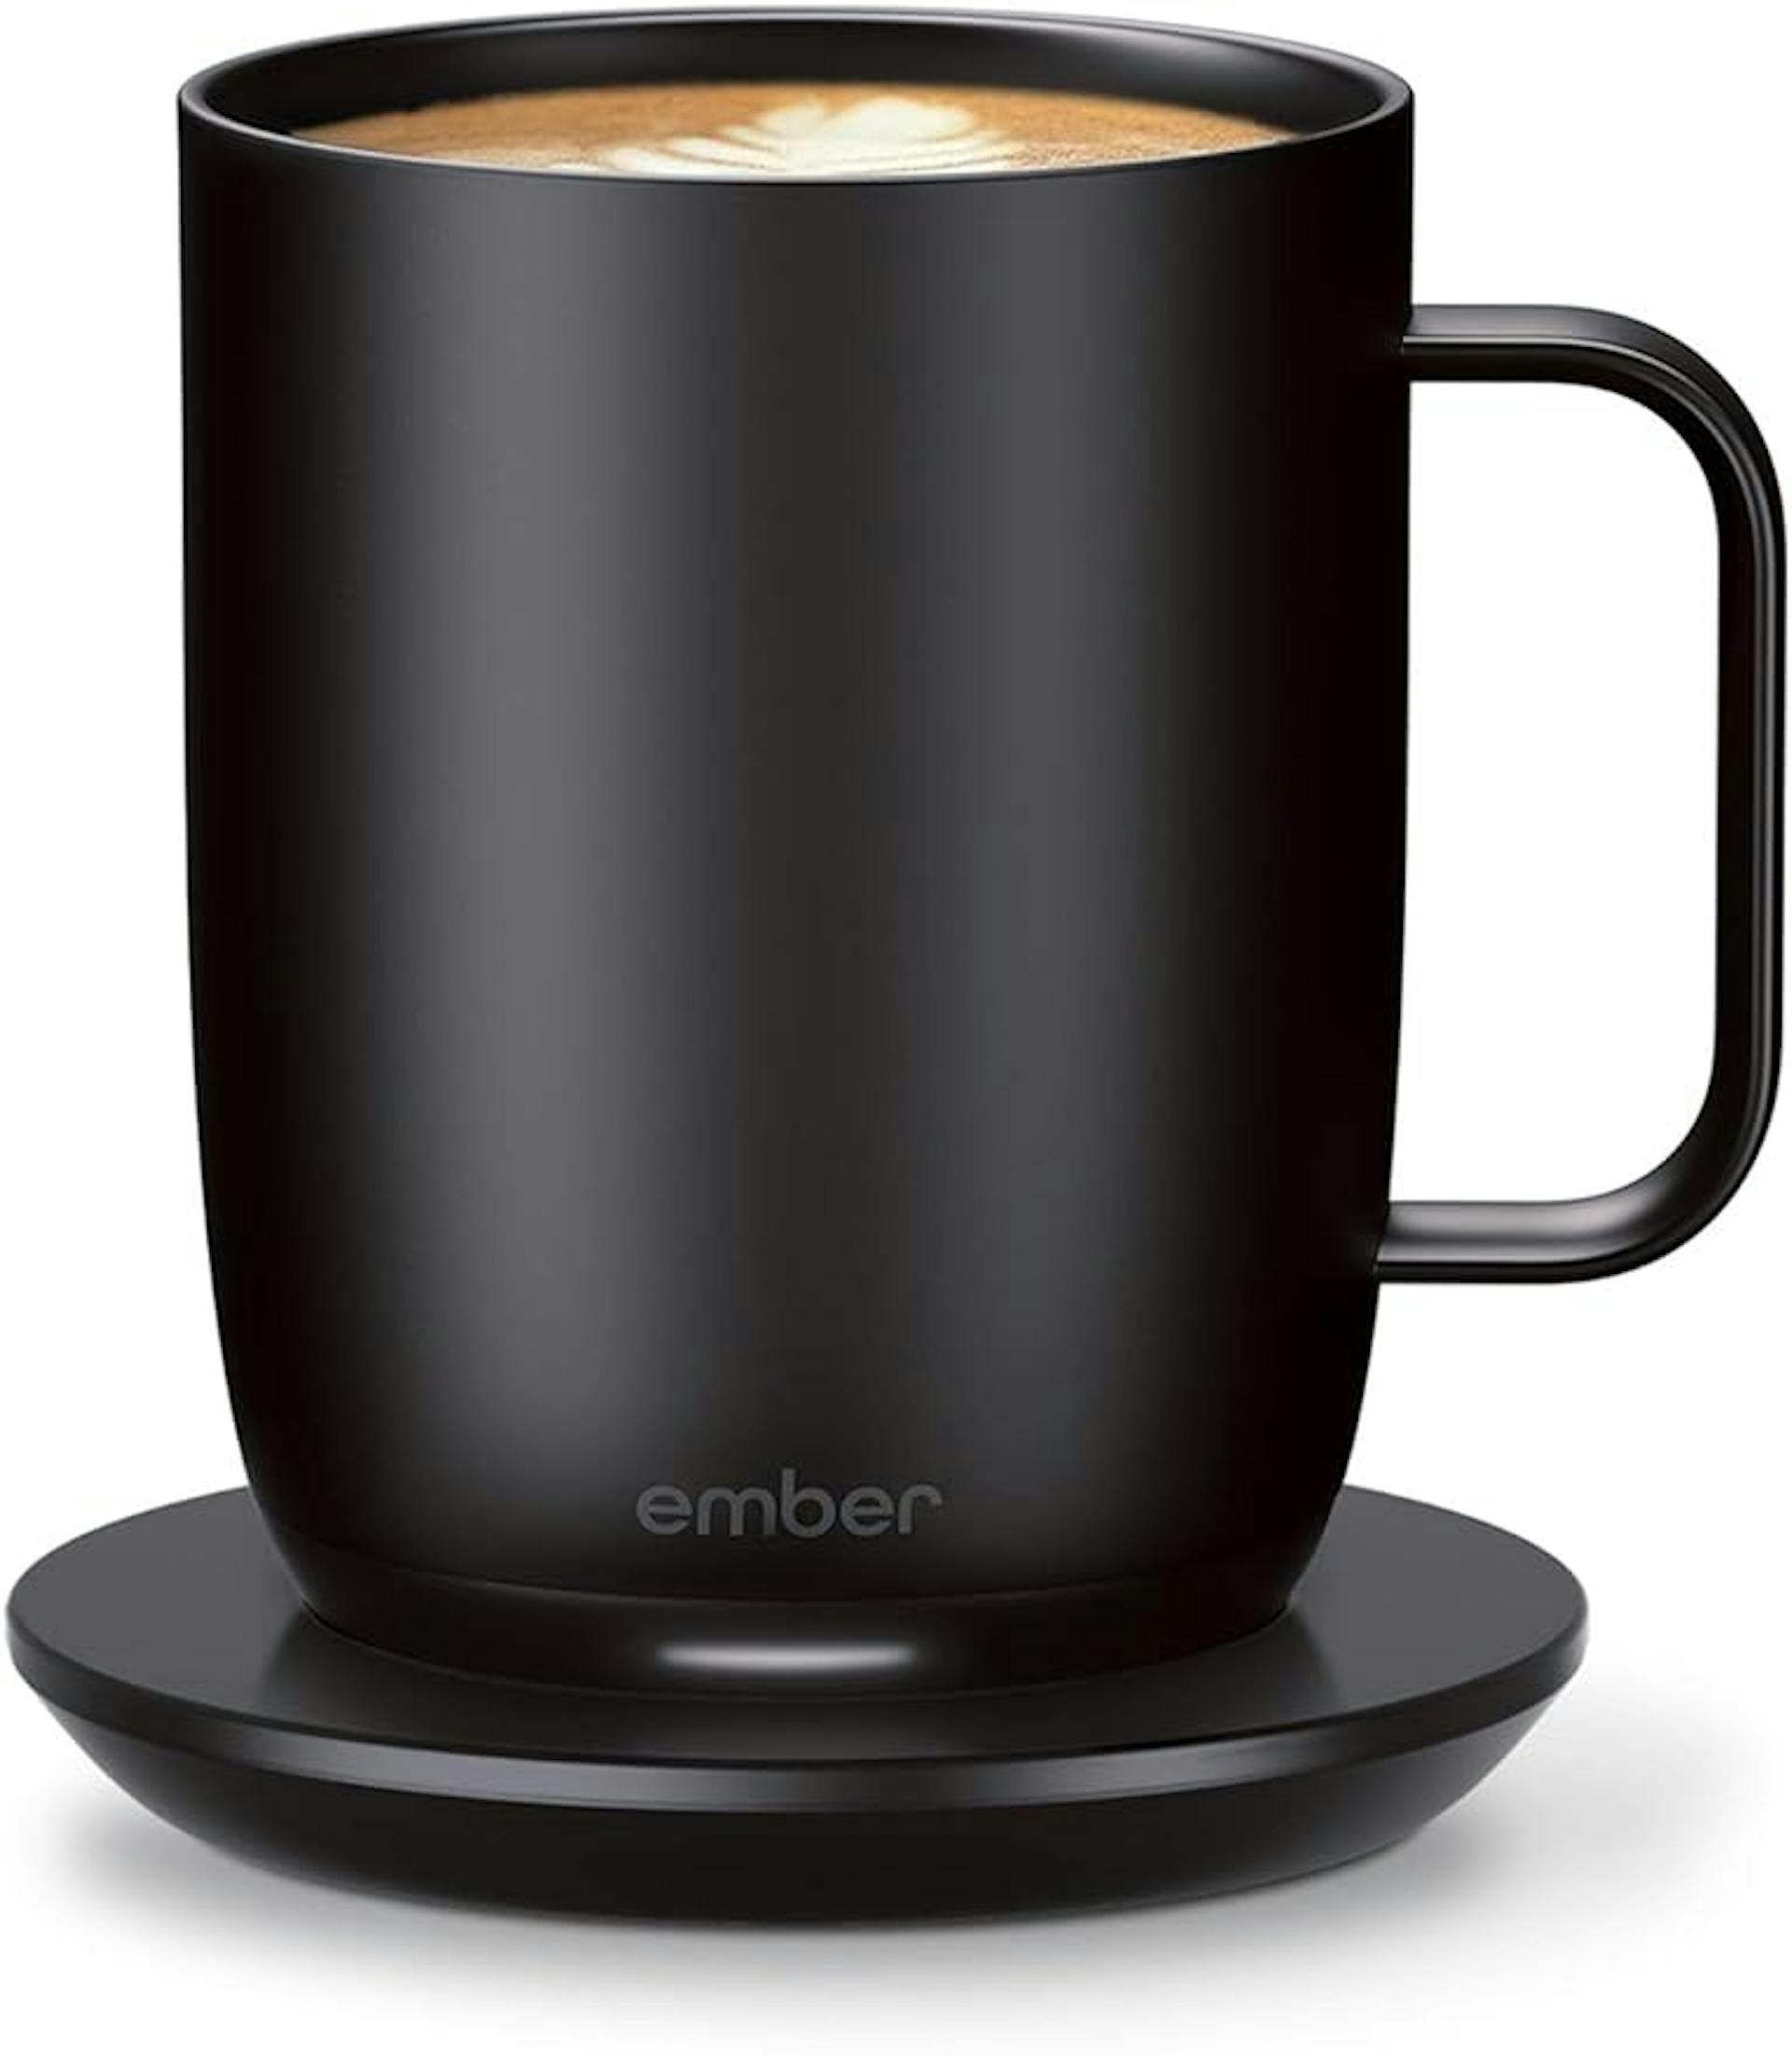 Heated Coffee Mug